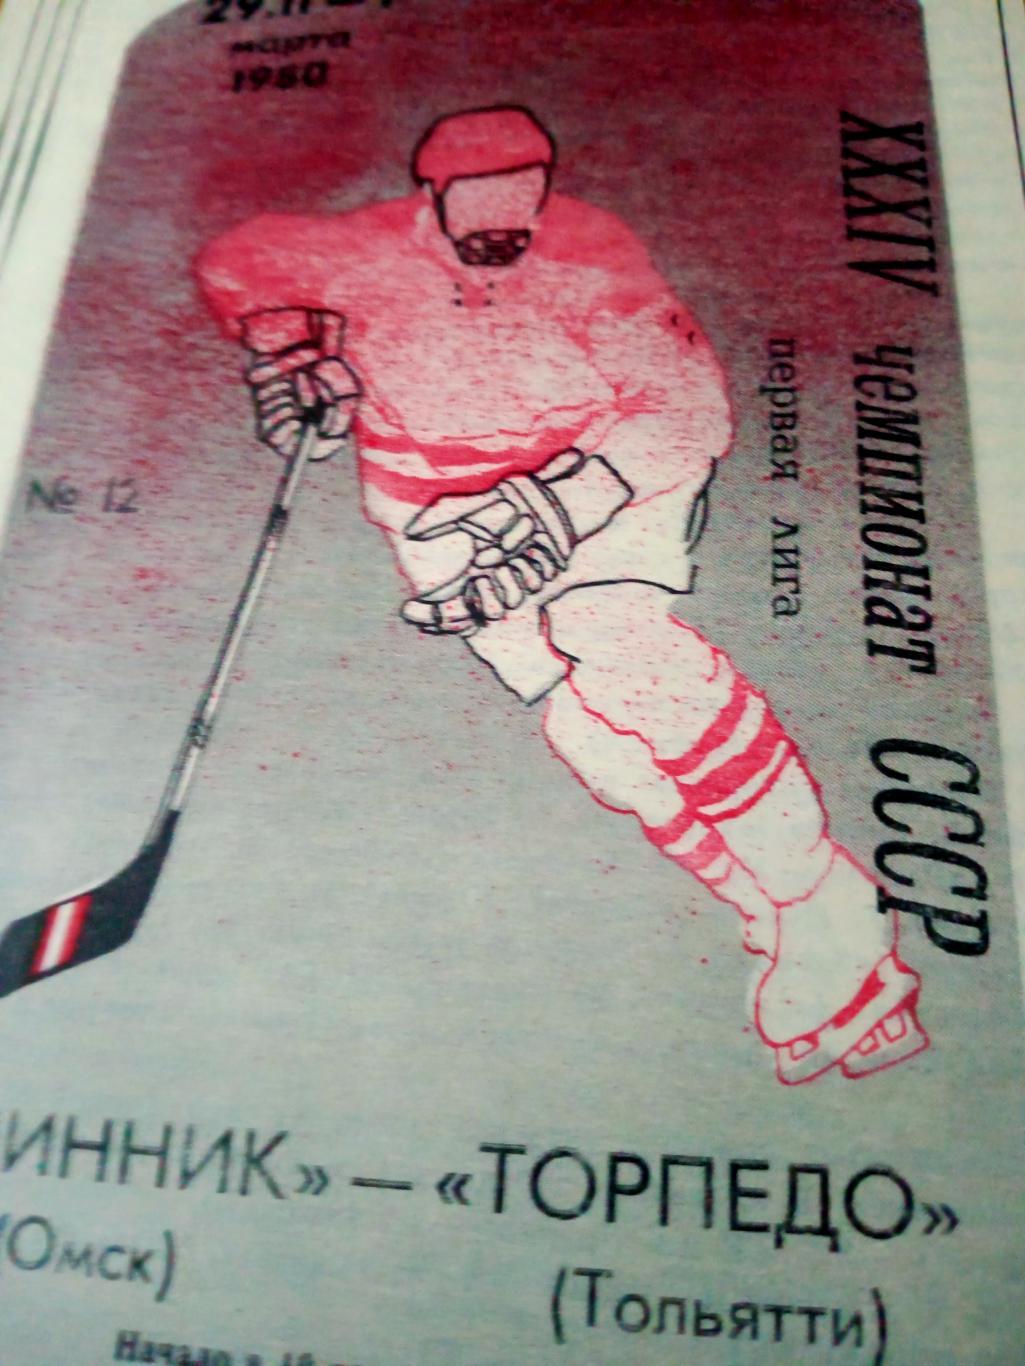 Шинник Омск - Торпедо Тольятти. 29.02 - 1.03. 1980 год